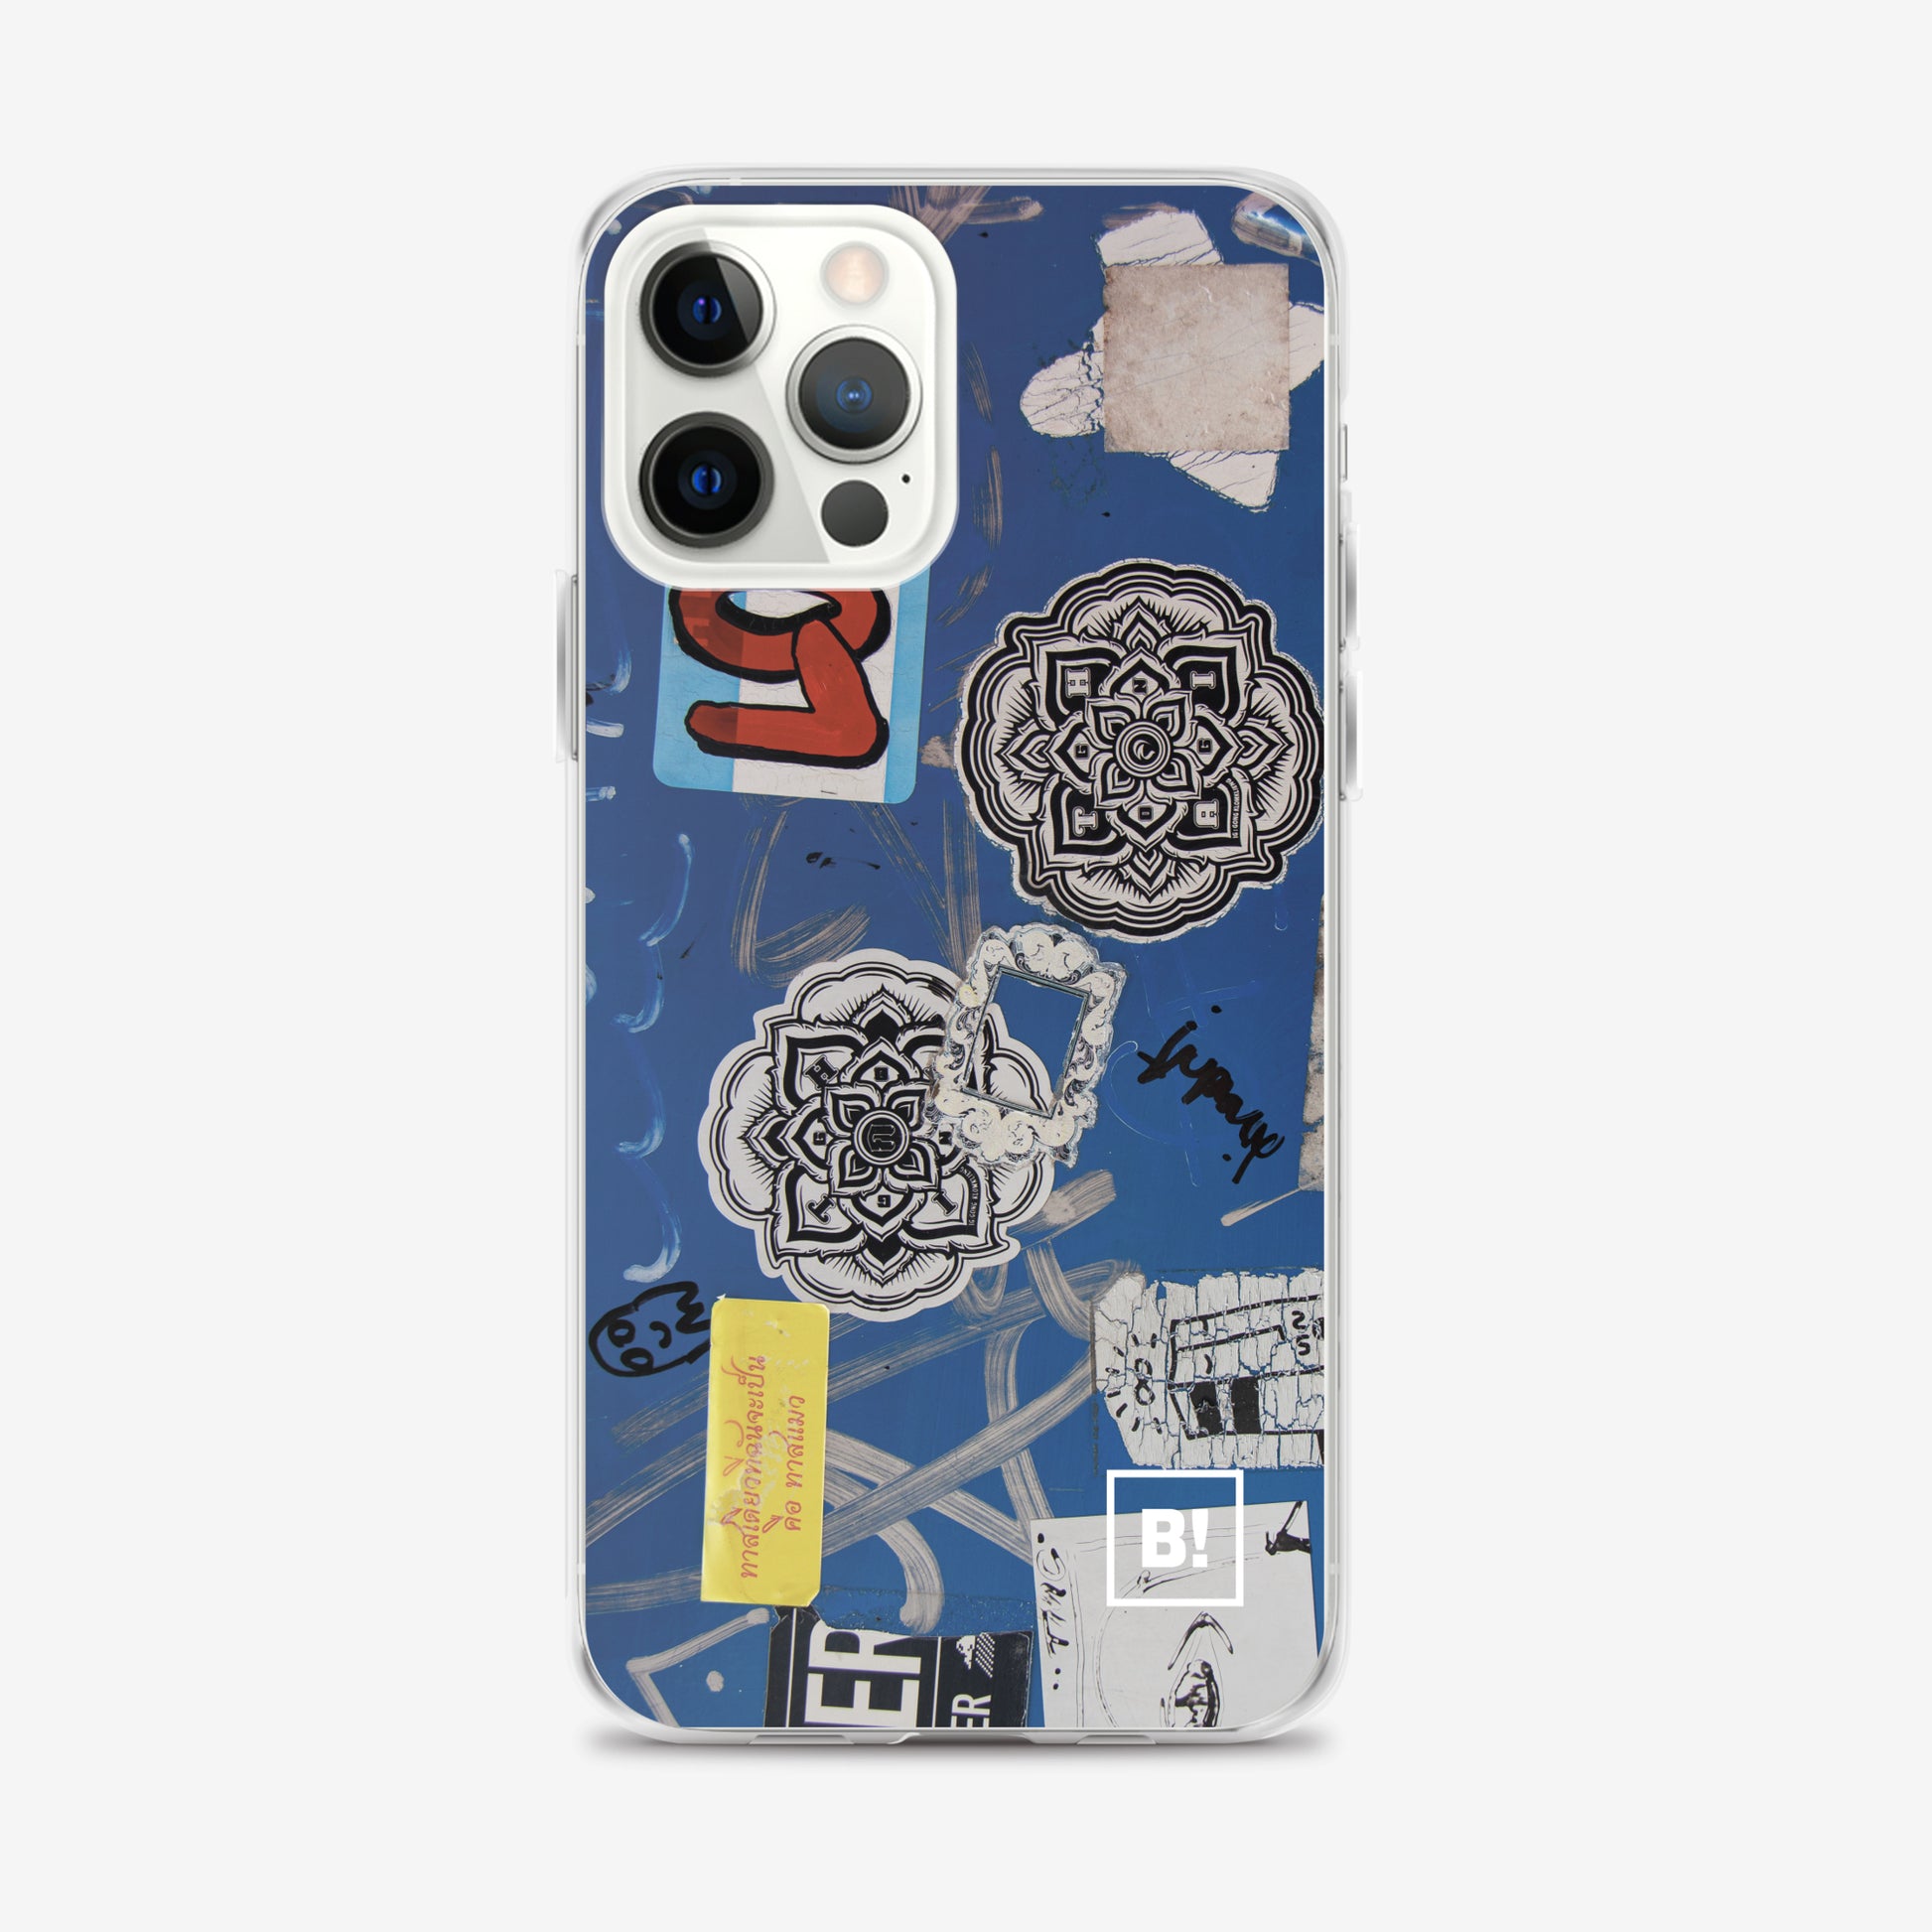 Binspired Leo Leo No1 Urban Art iPhone 12 Pro Max Case